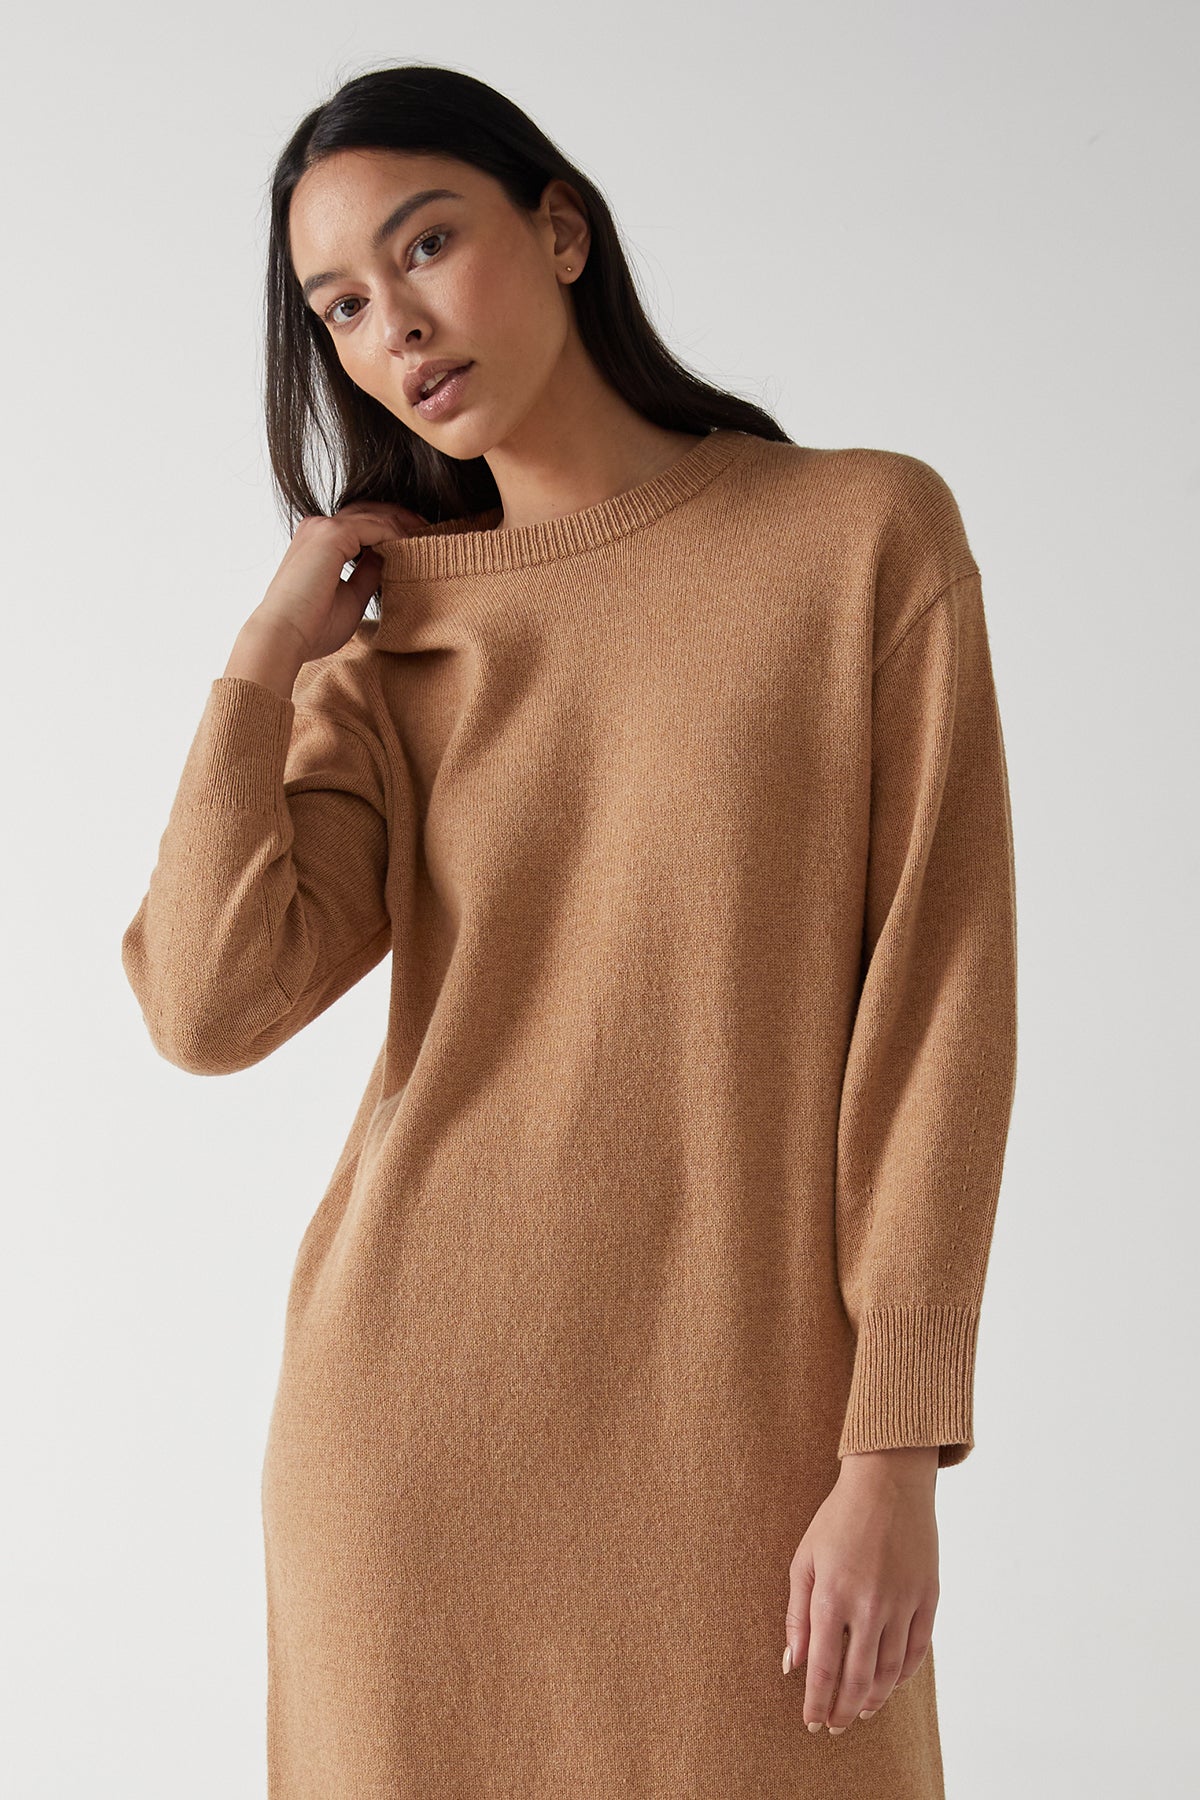 The model is showcasing a Velvet by Jenny Graham LAUREL DRESS, featuring side hem slits for a minimal silhouette.-25315843768513